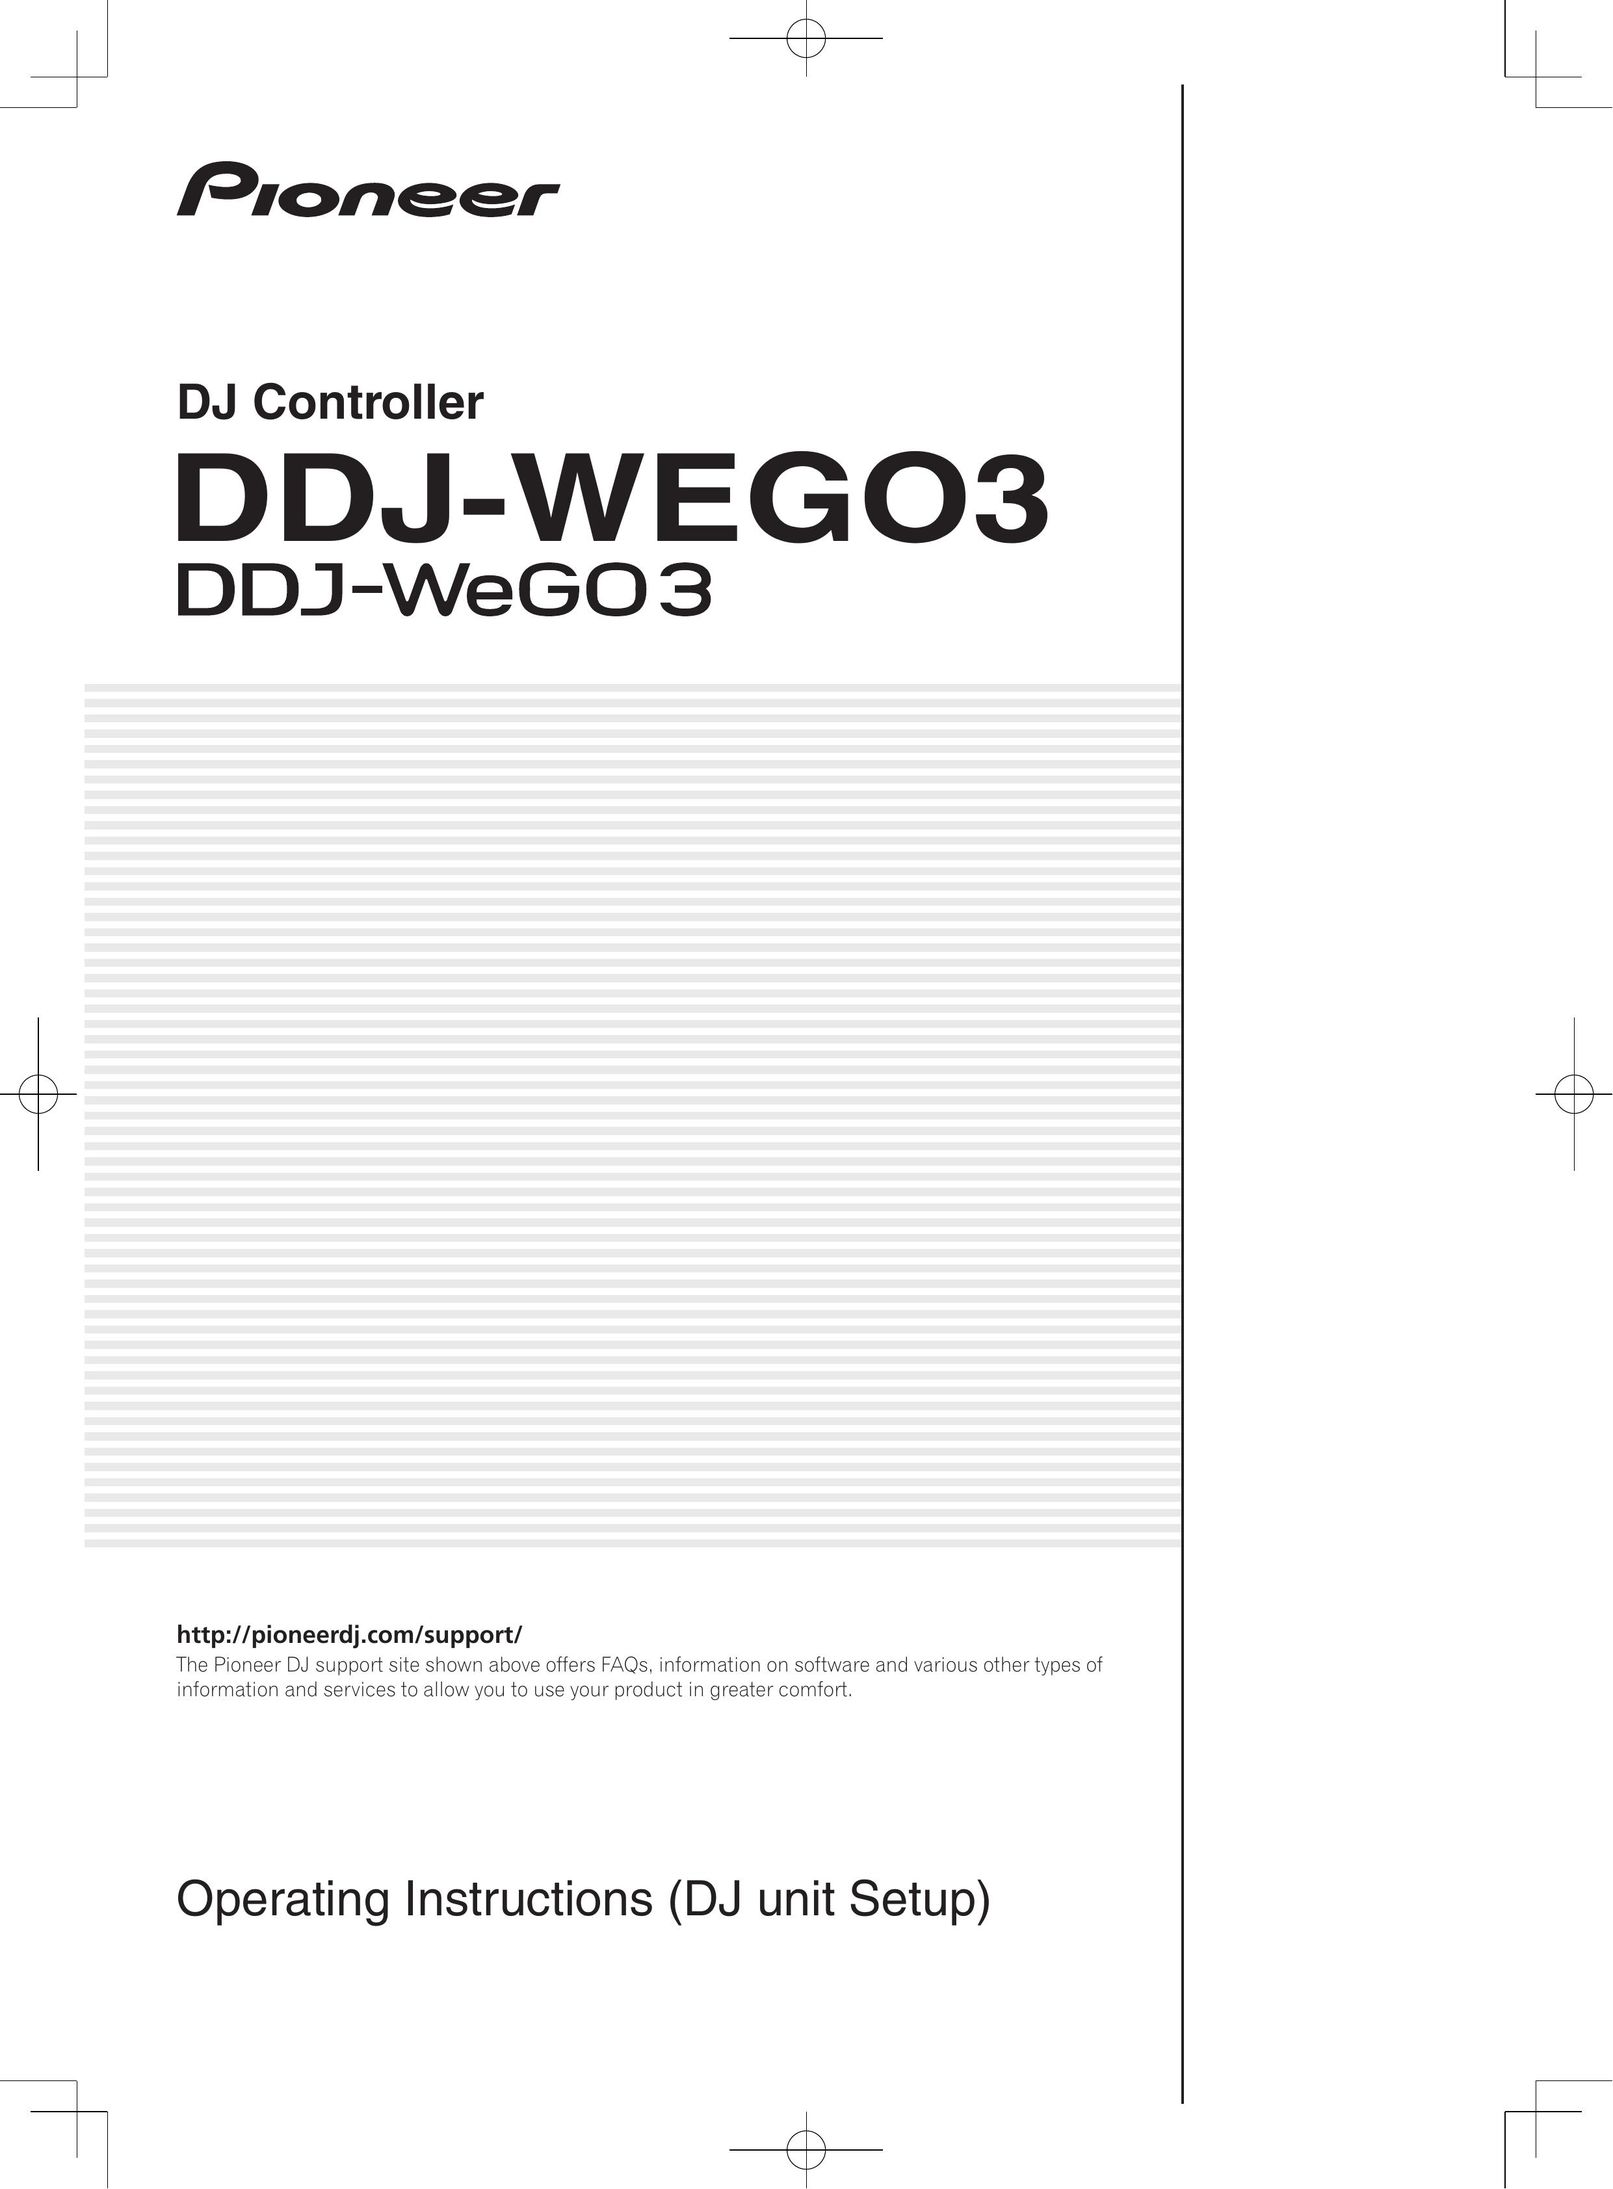 Pioneer DDJ-WEGO3-K Musical Toy Instrument User Manual